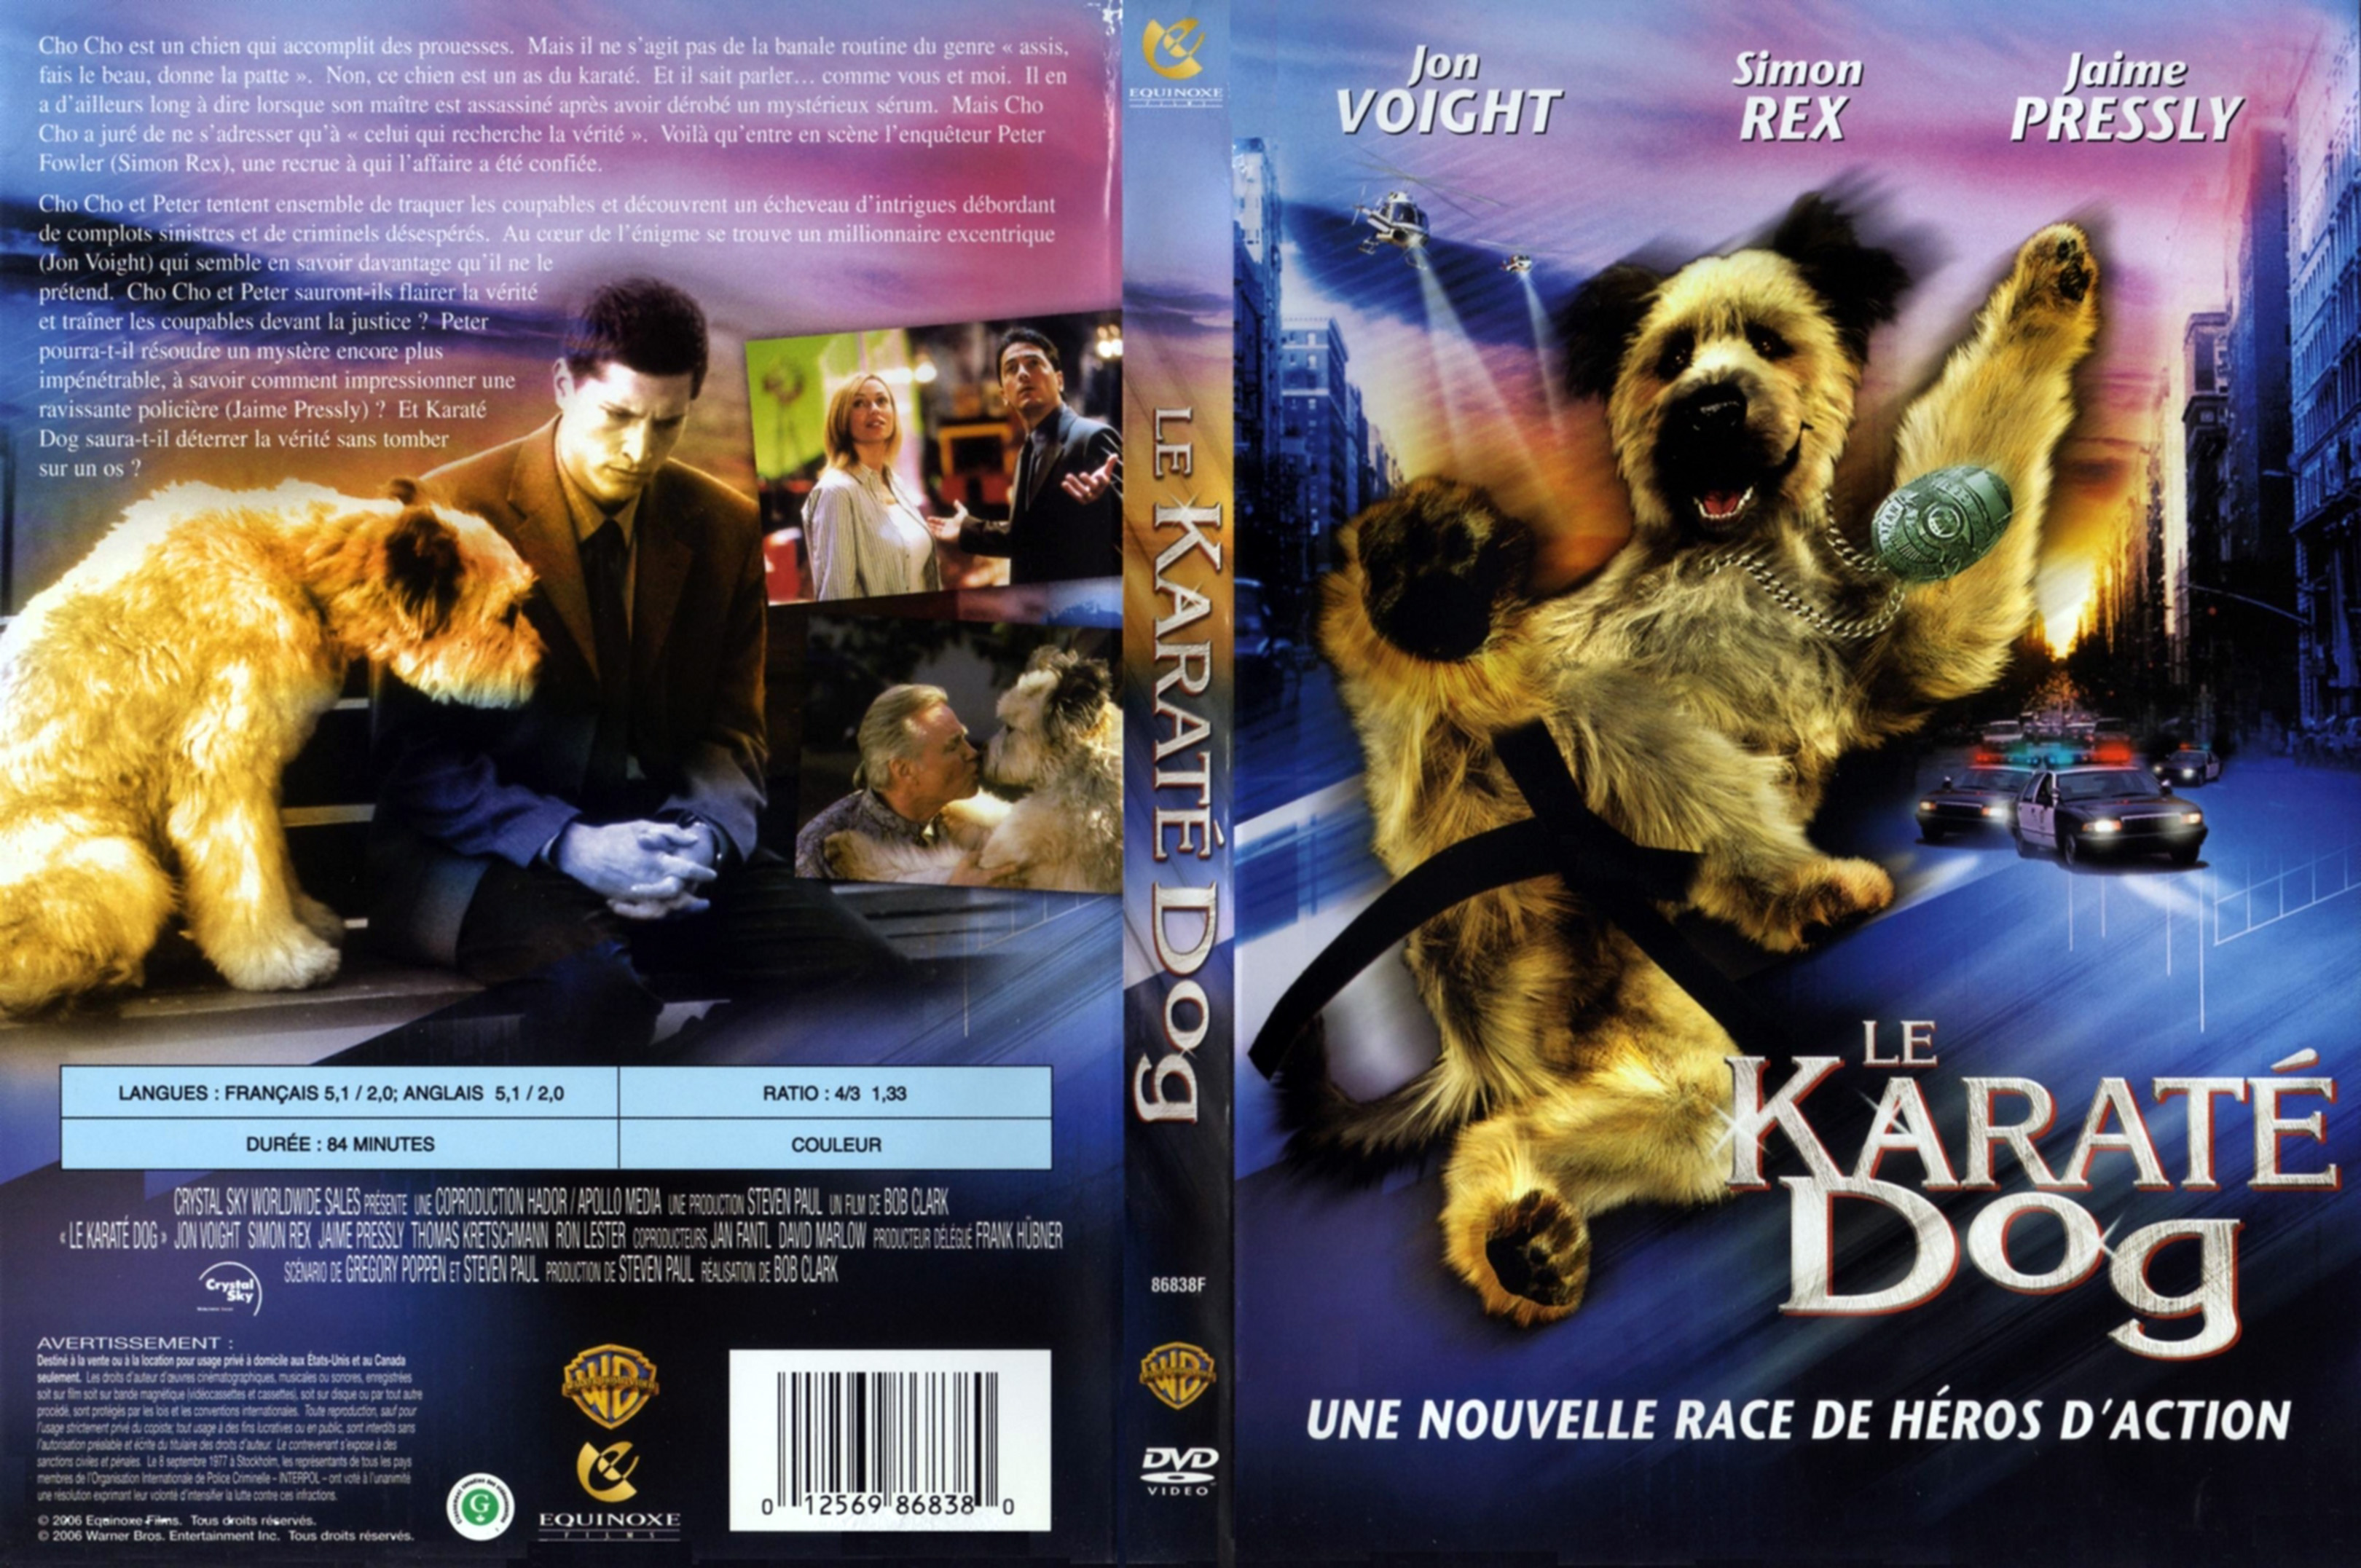 Jaquette DVD Le karate dog